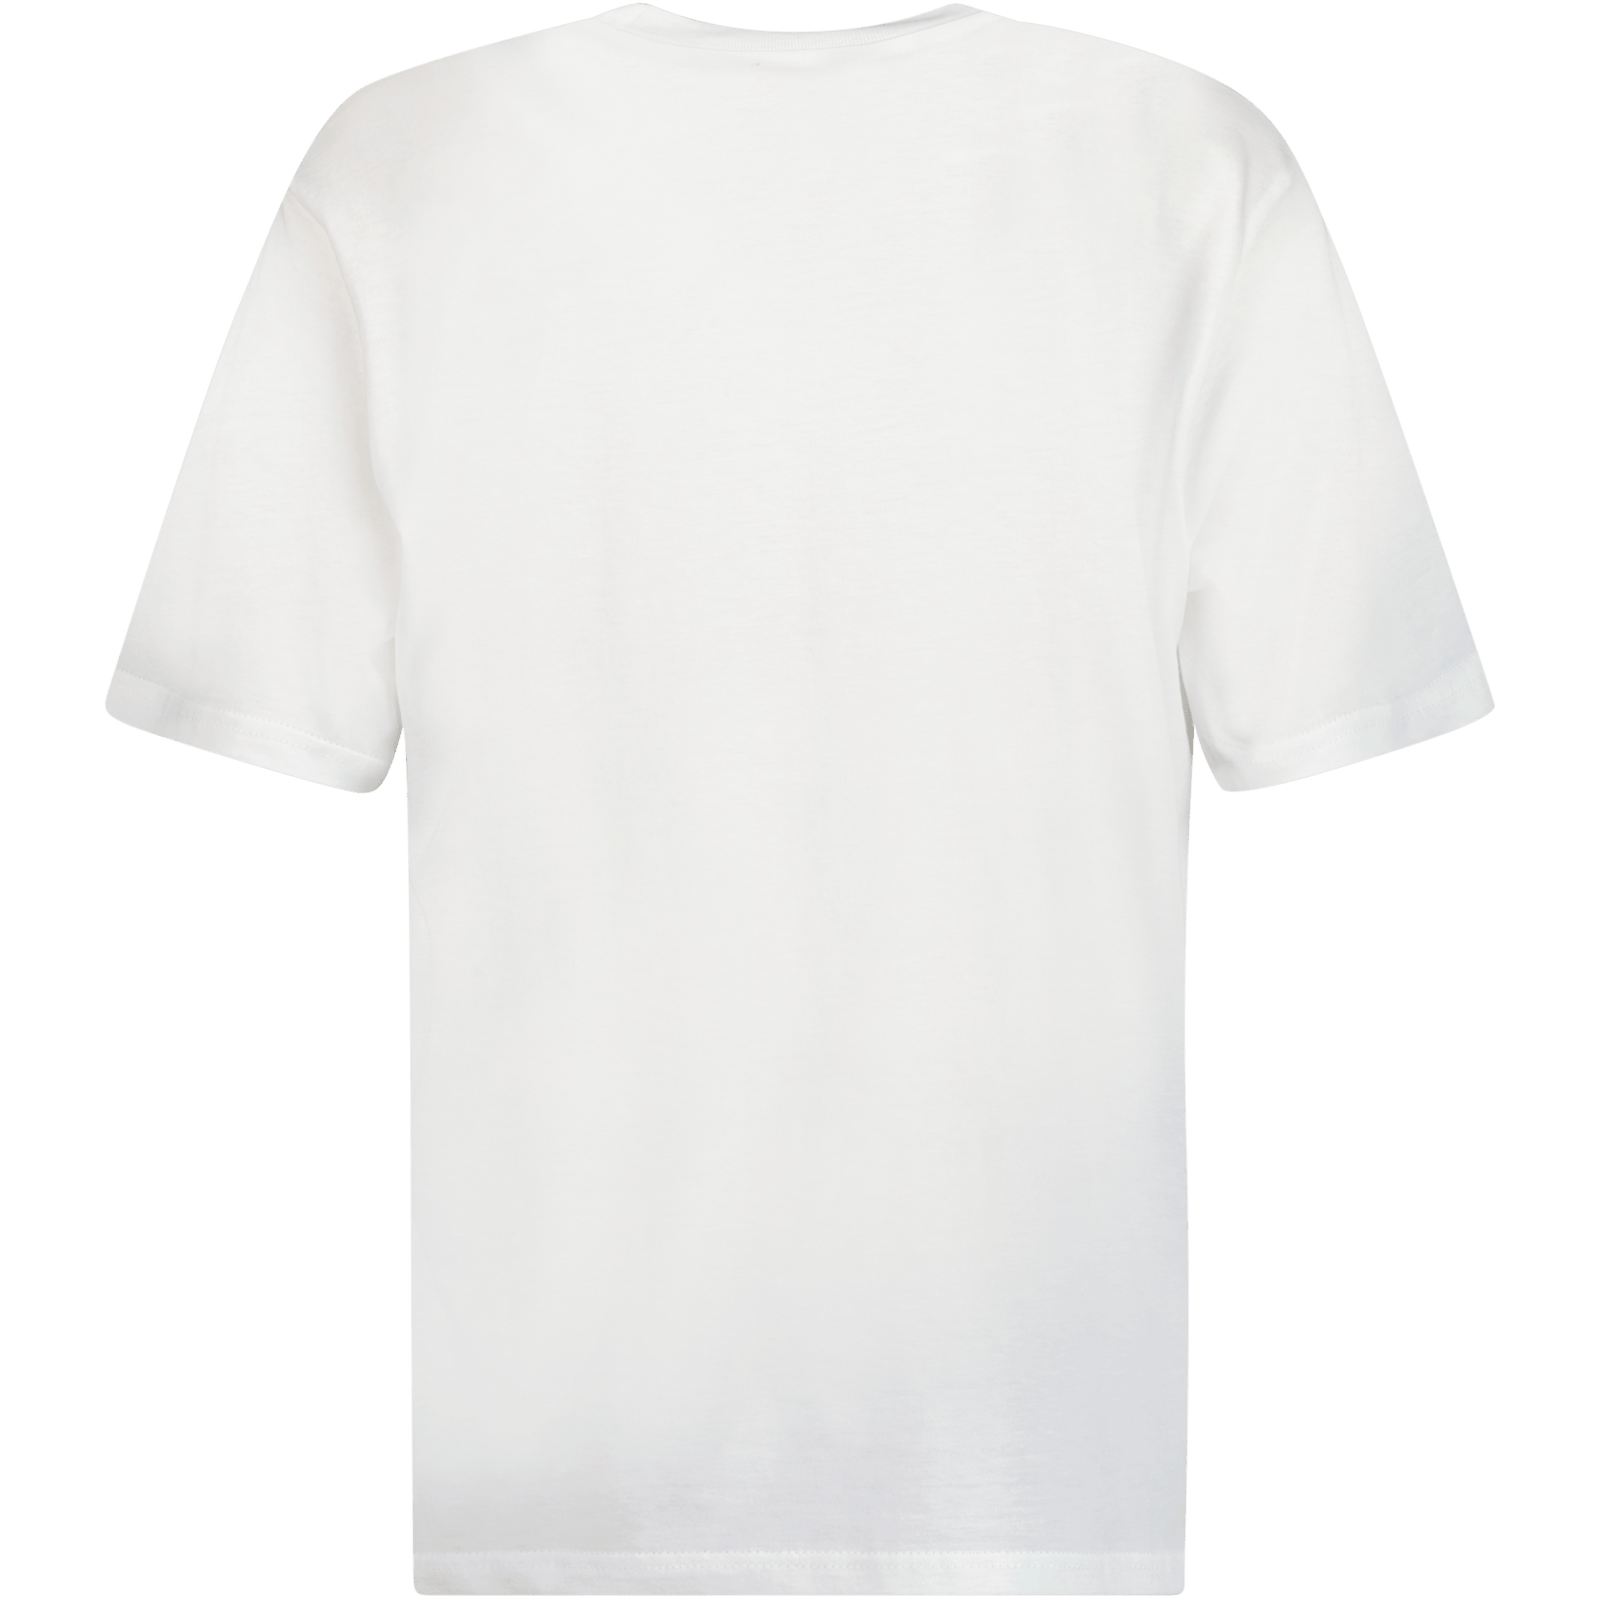 Diesel Kinder Jongens T-Shirt Wit 4Y